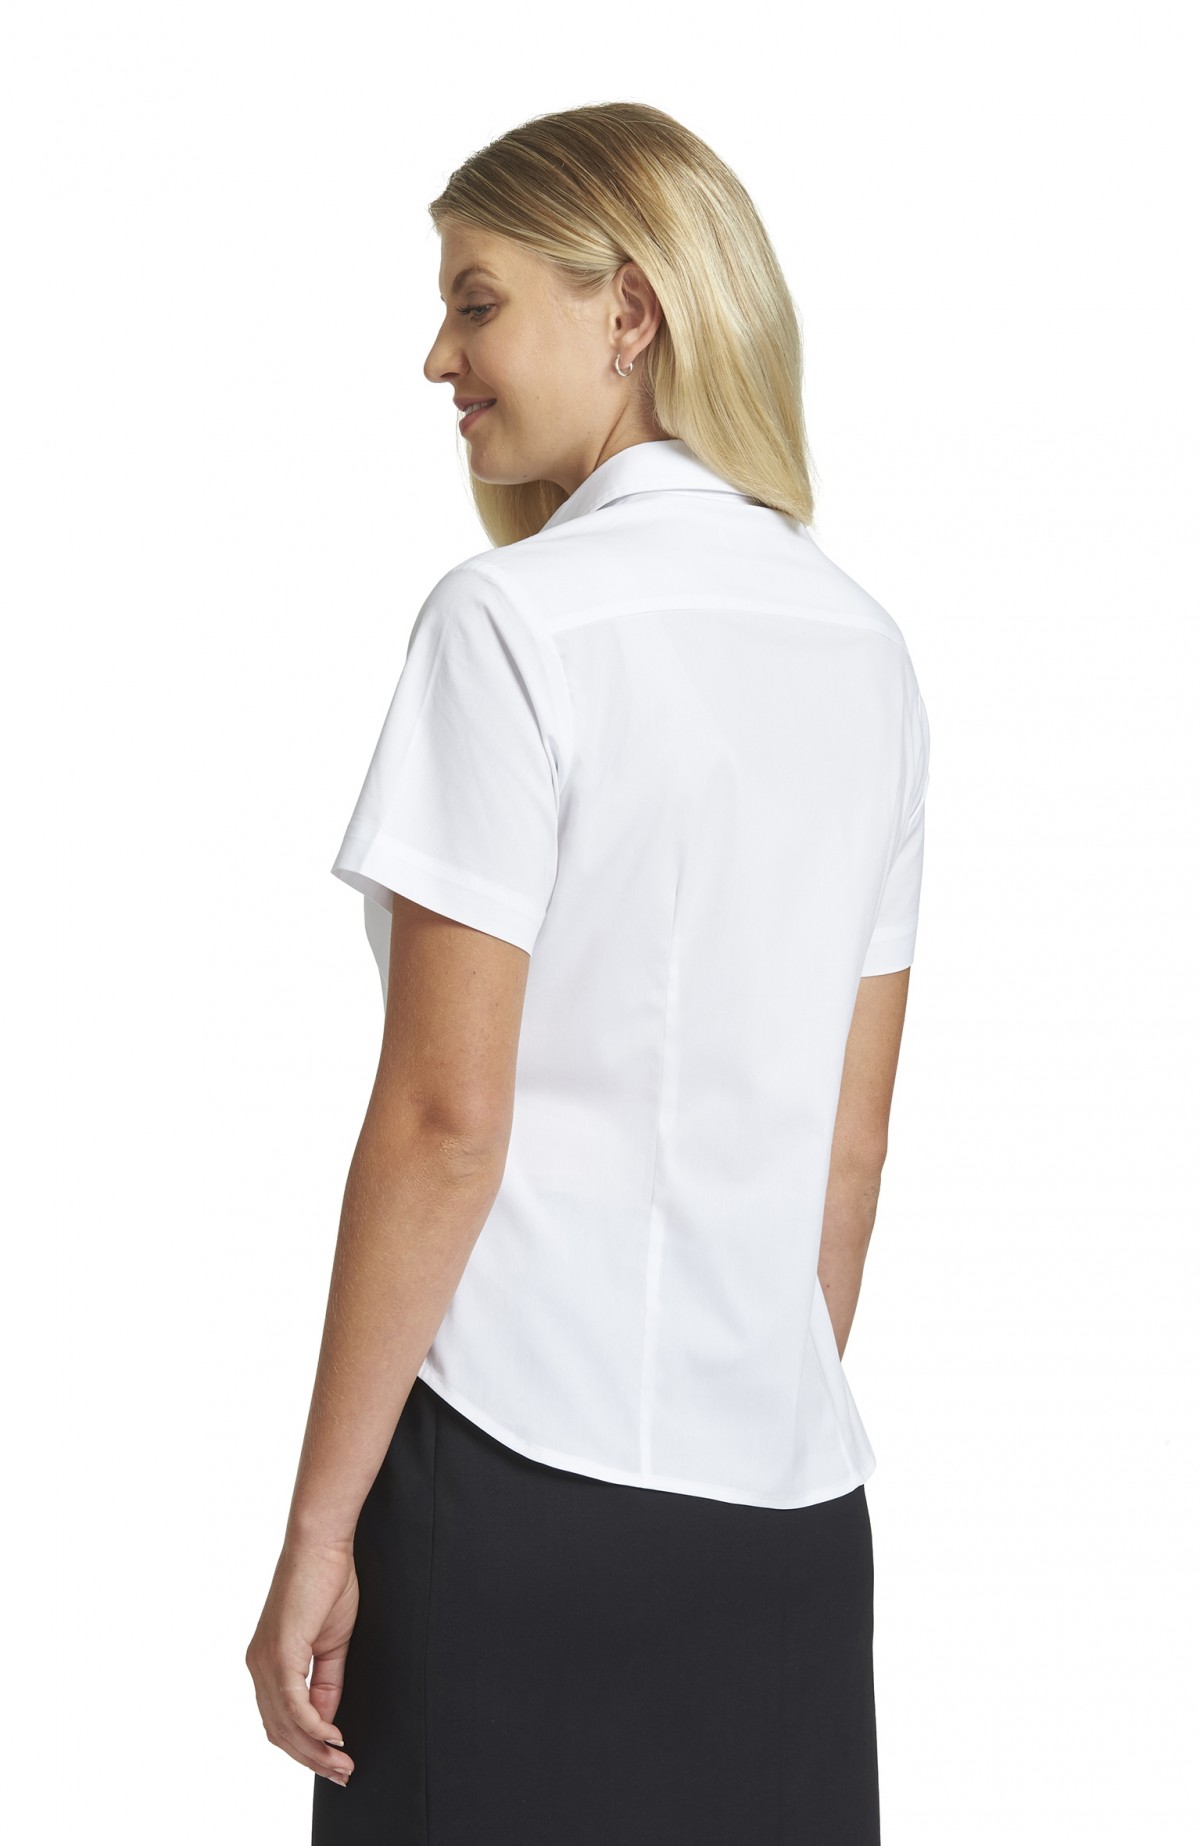 Buy Women's White Short Sleeve Shirt in NZ | The Uniform Centre